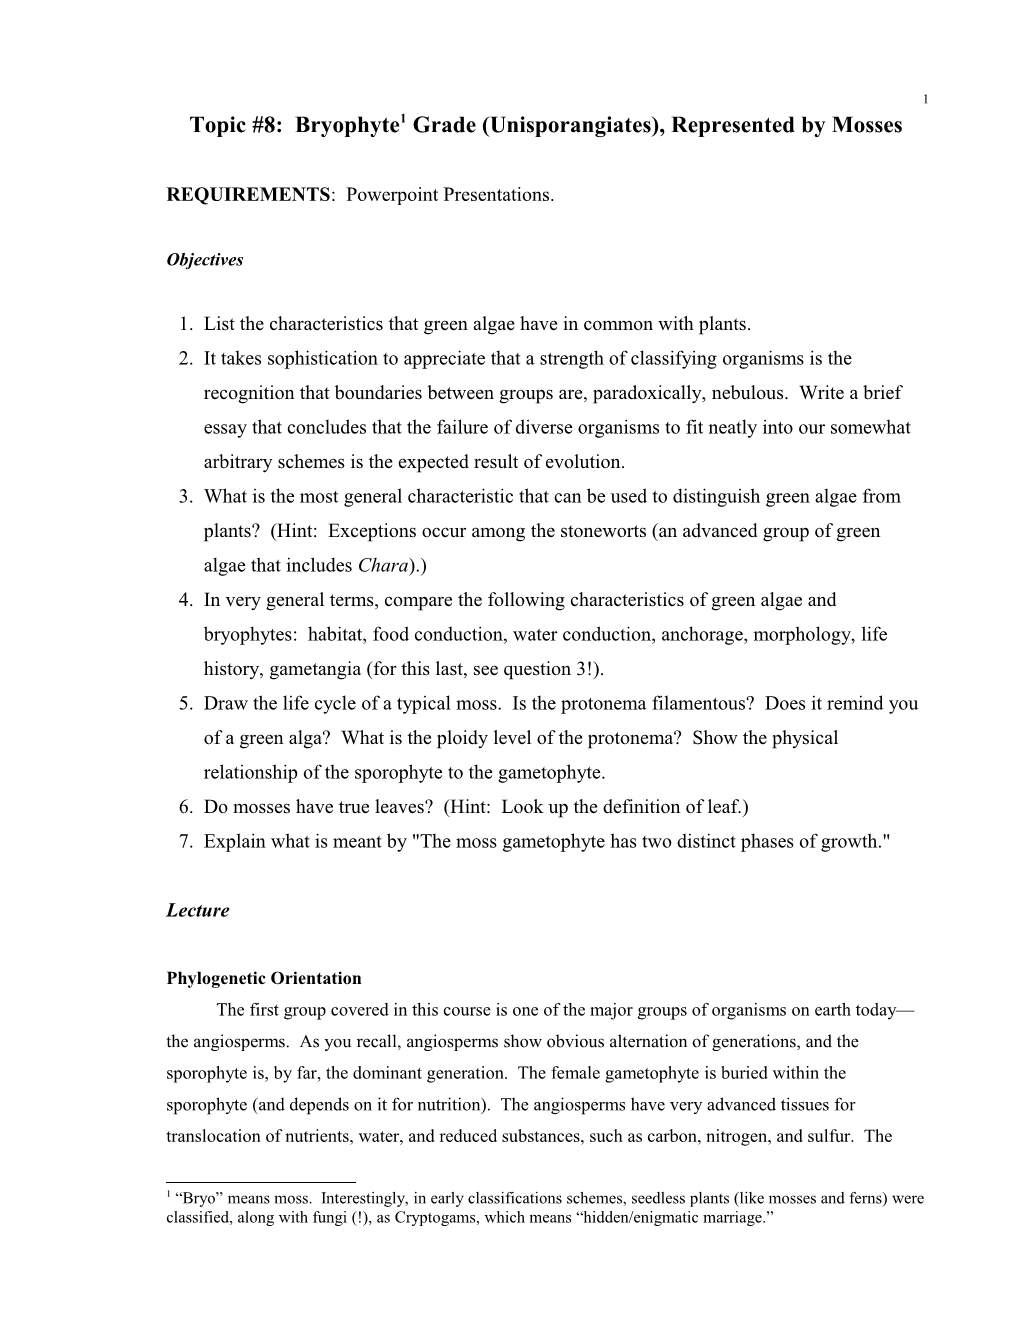 Topic #8: Bryophyte 1 Grade (Unisporangiates), Represented by Mosses